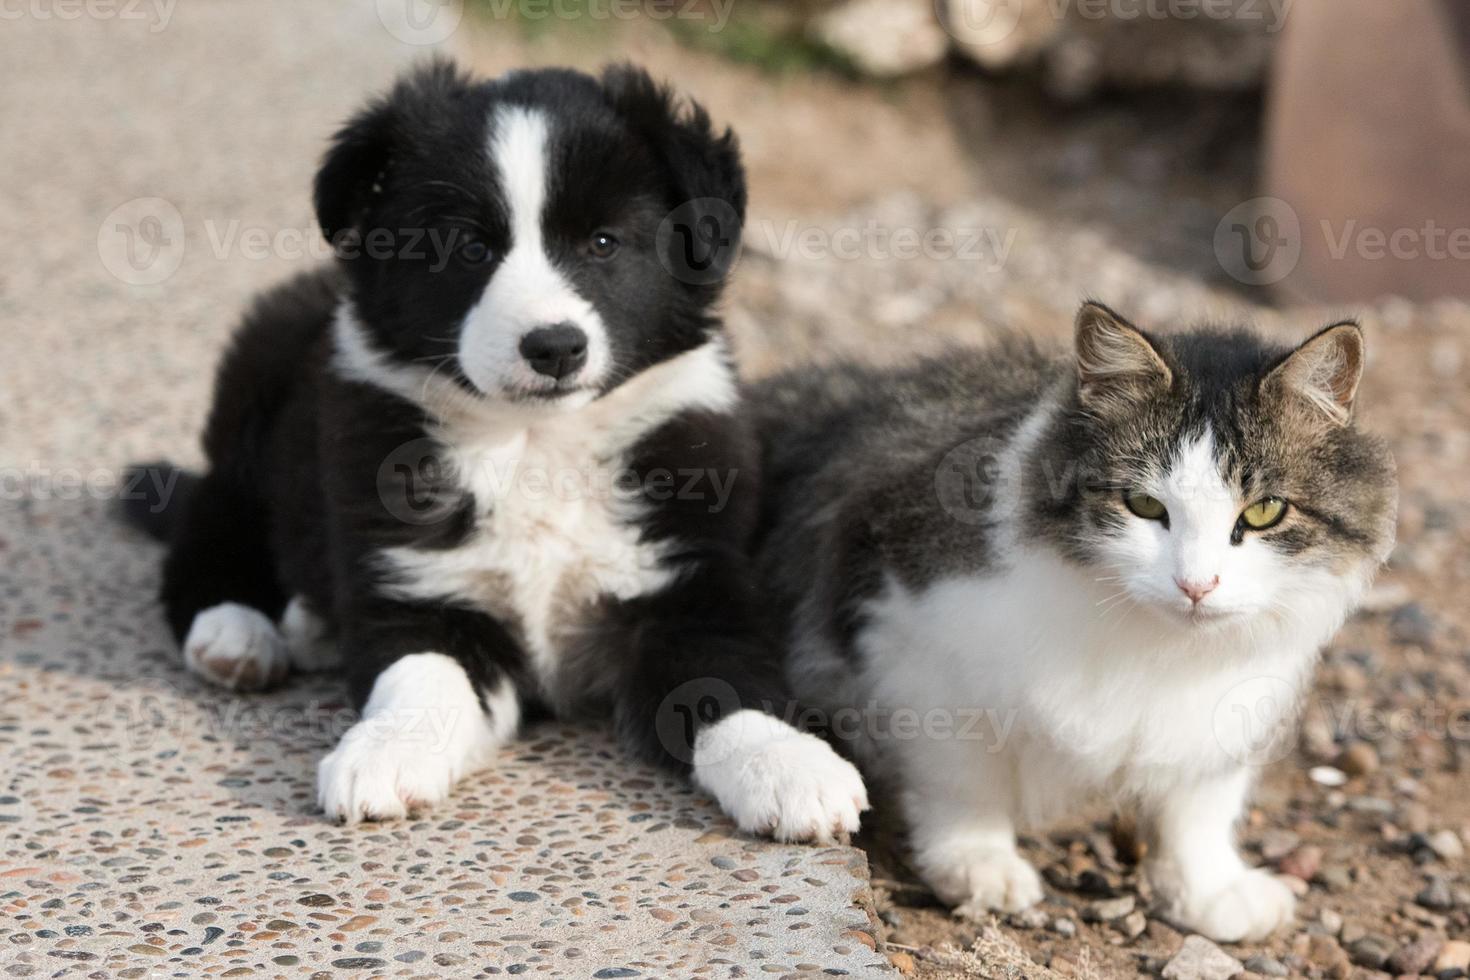 border collie puppy dog portrait with a cat photo